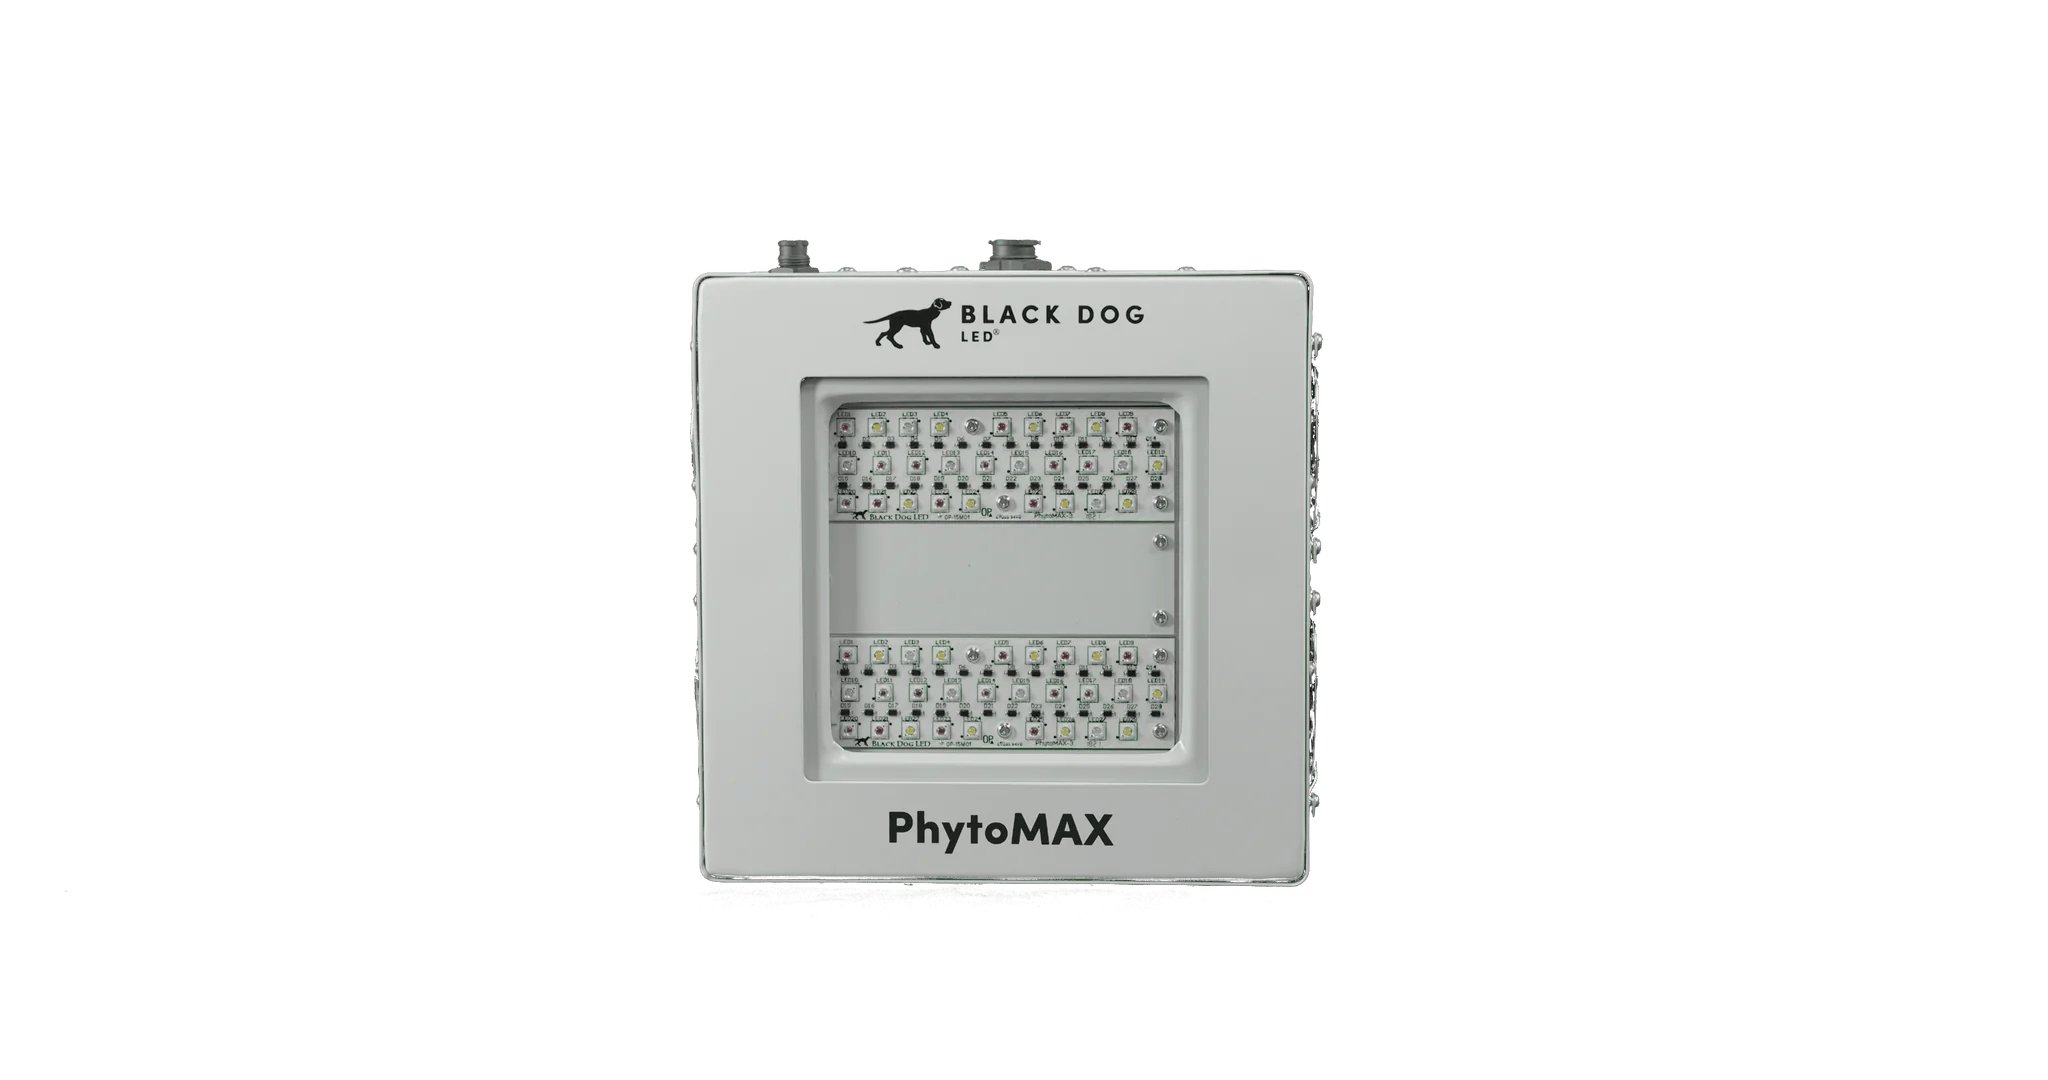 Black Dog PhytoMAX-4 2SP 125 Watt LED Grow Light - Green Thumb Depot